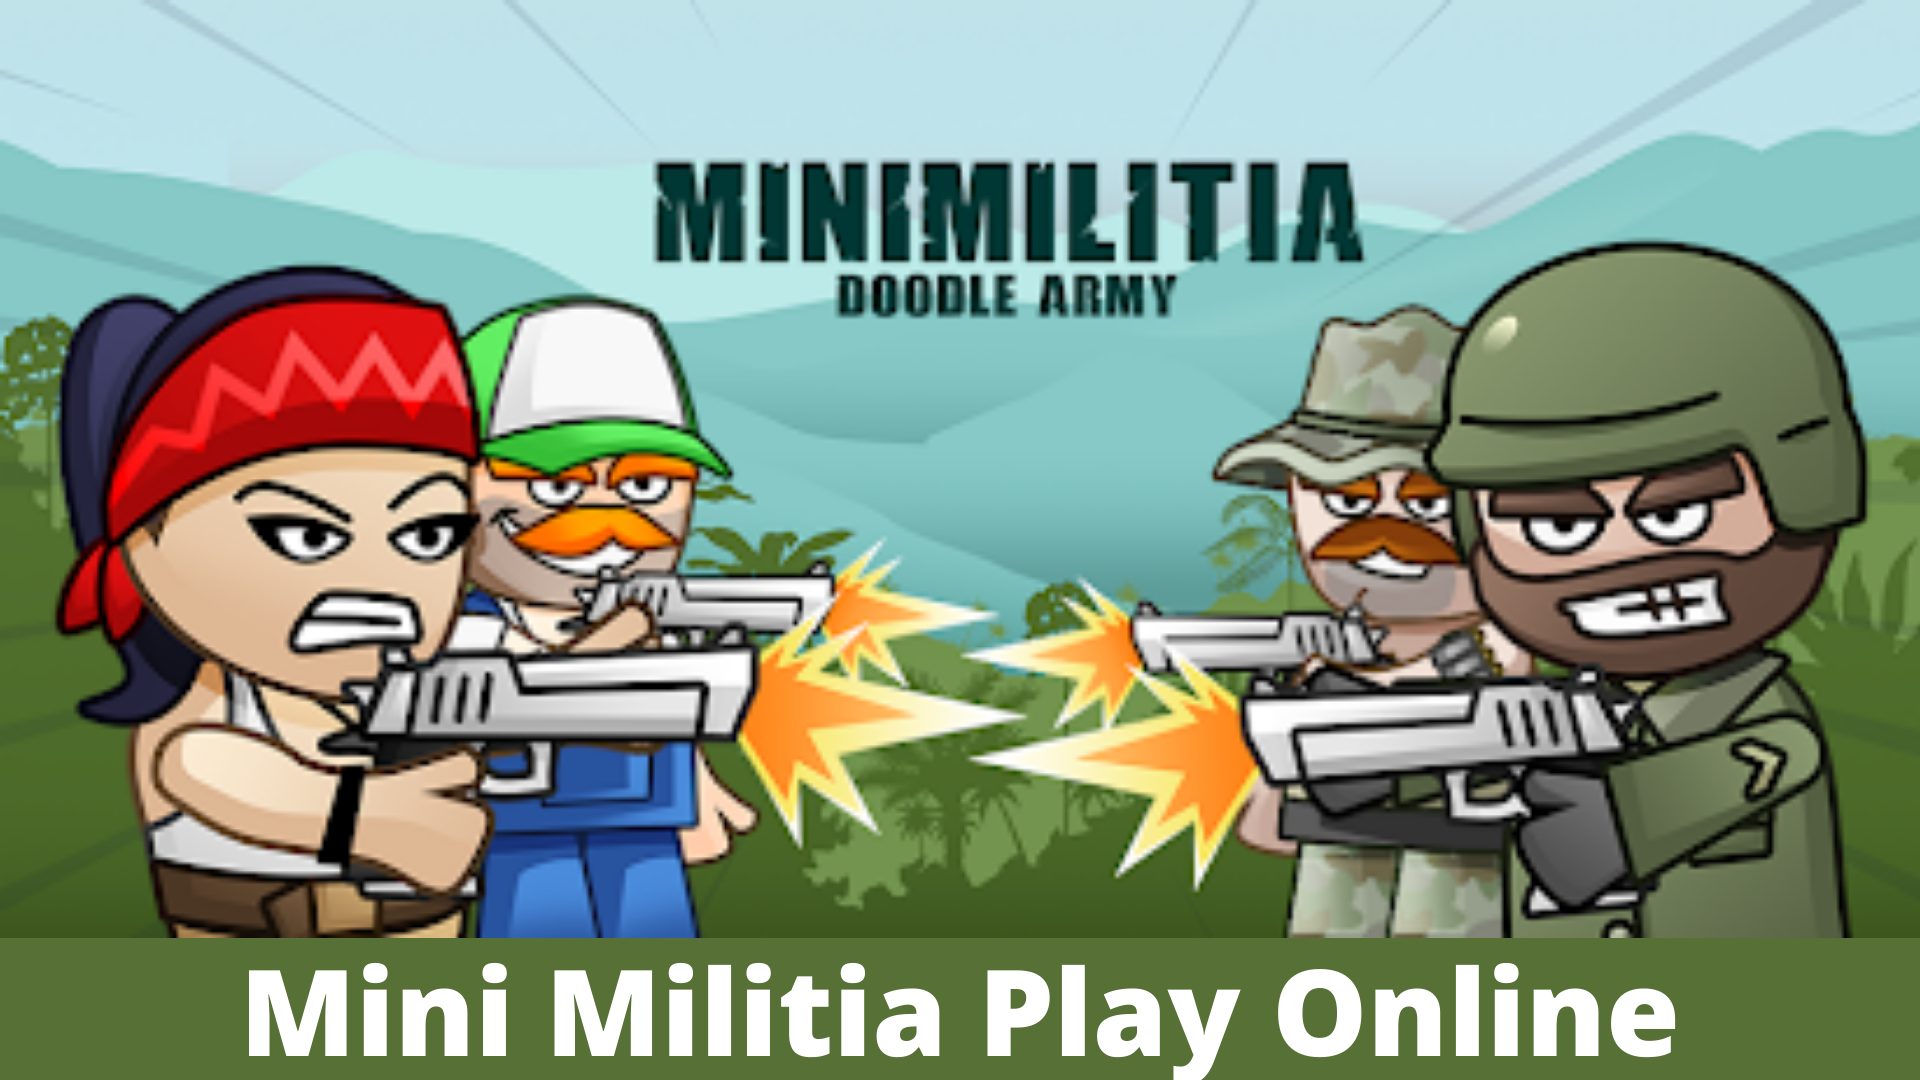 Mini Militia Play Online